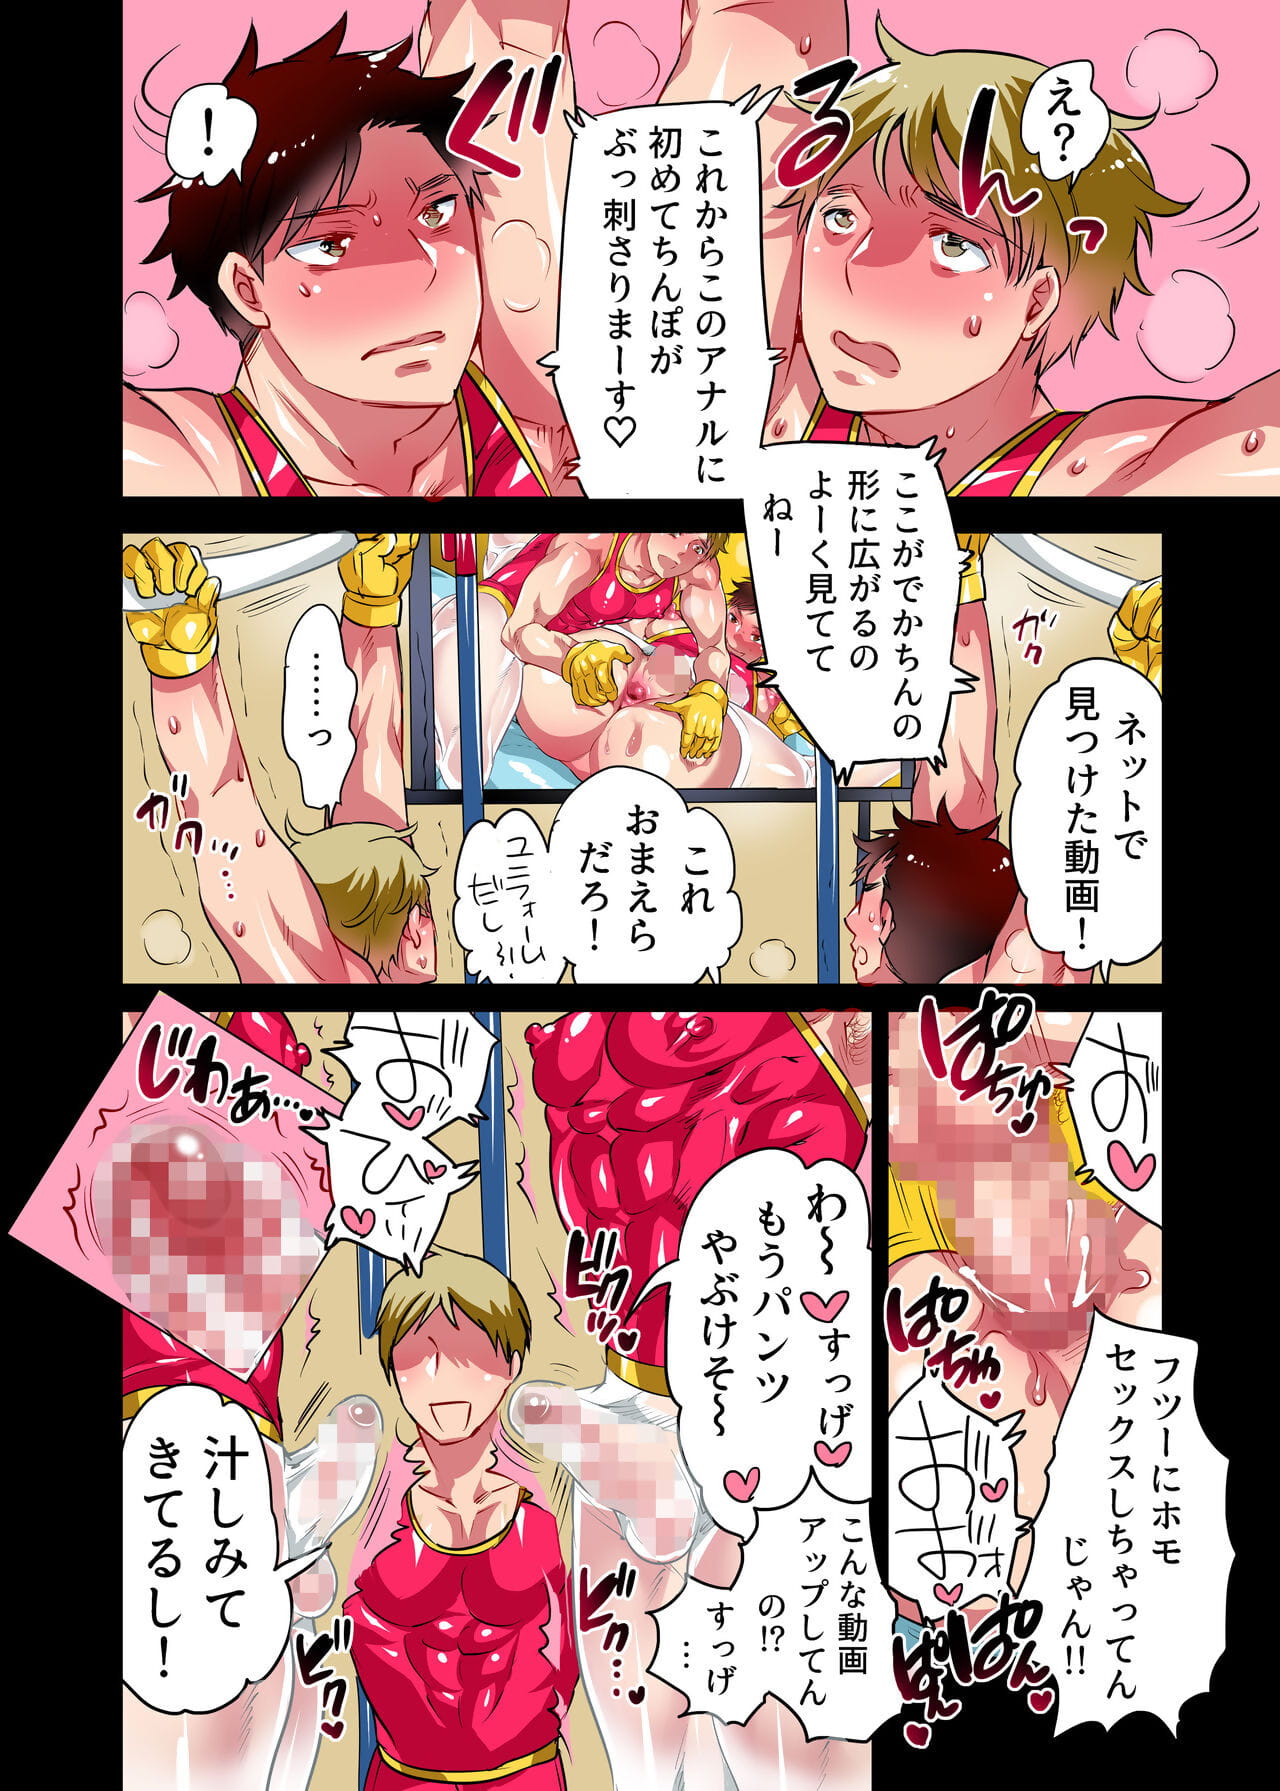 समलैंगिक ochi gakuen taisou bu/suiei बीयू page 1